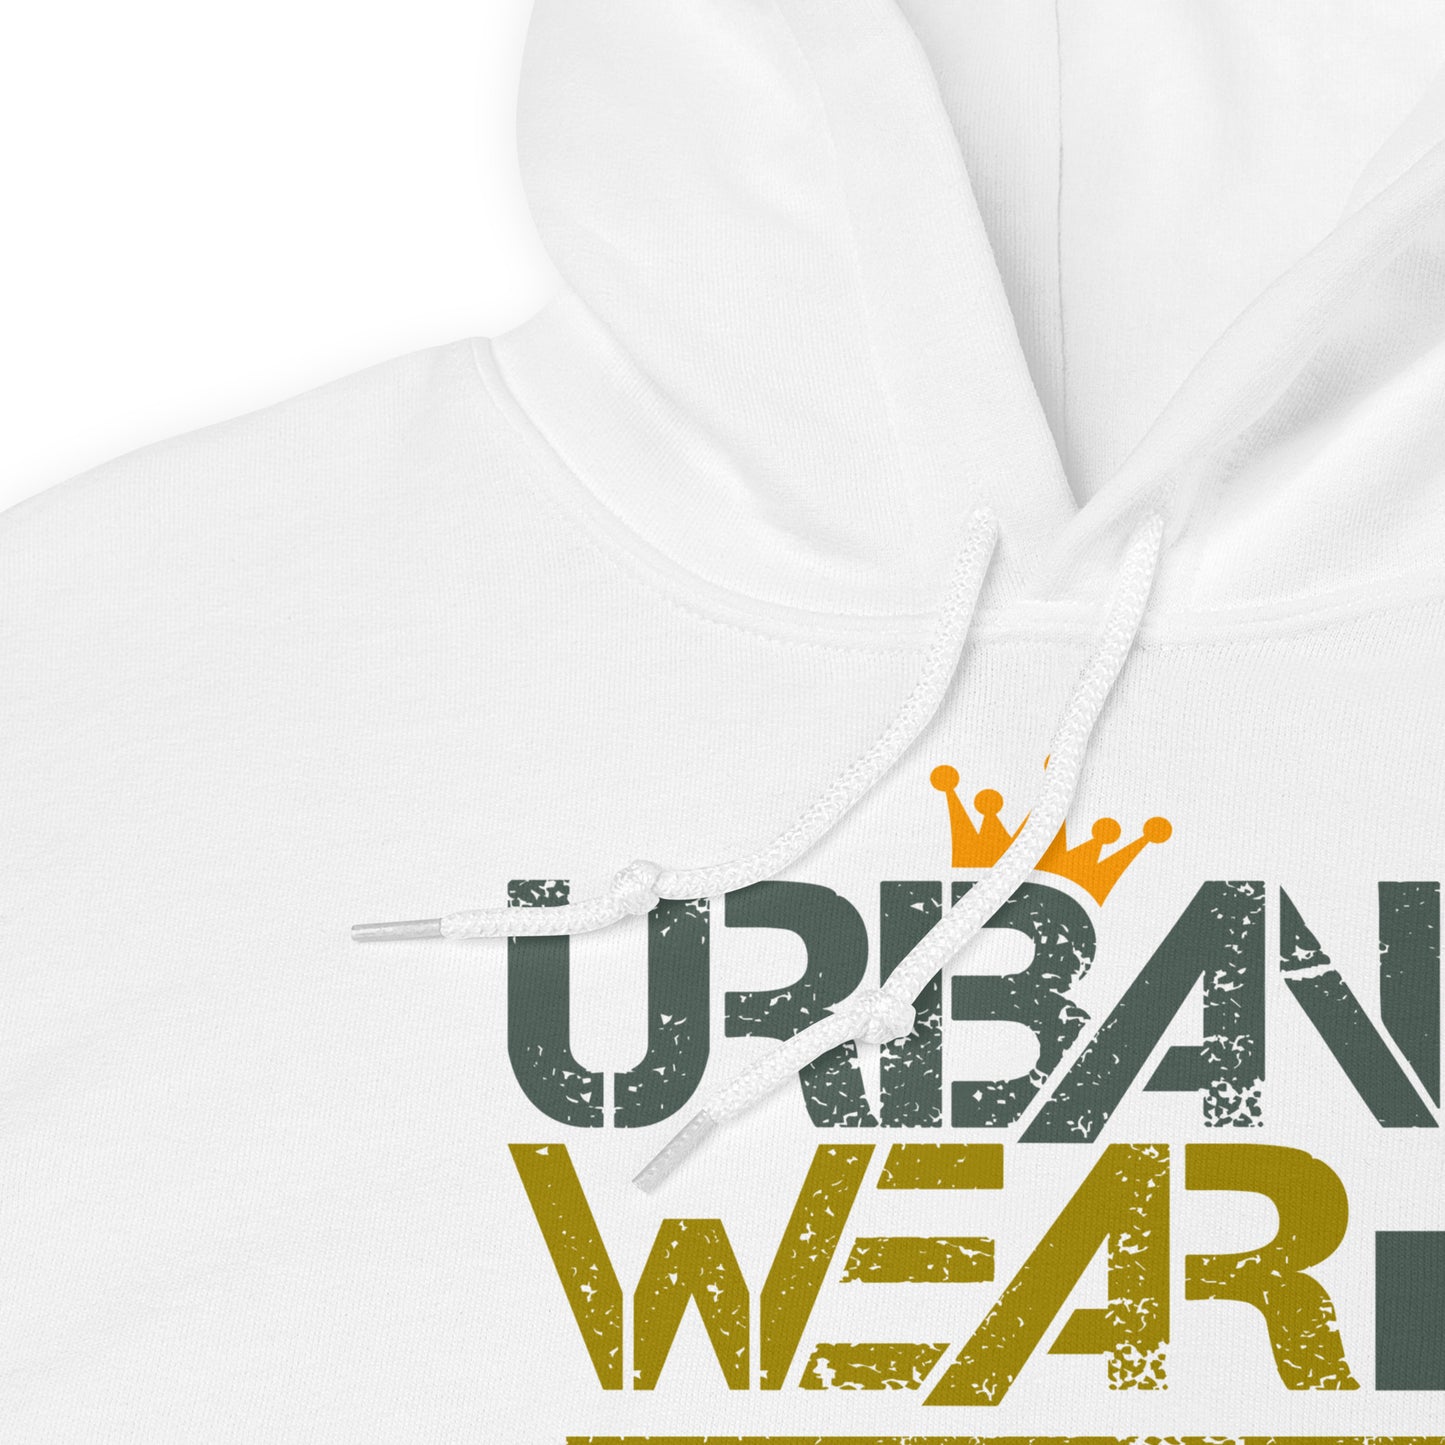 Sudadera Urban Wear | Siempre Original